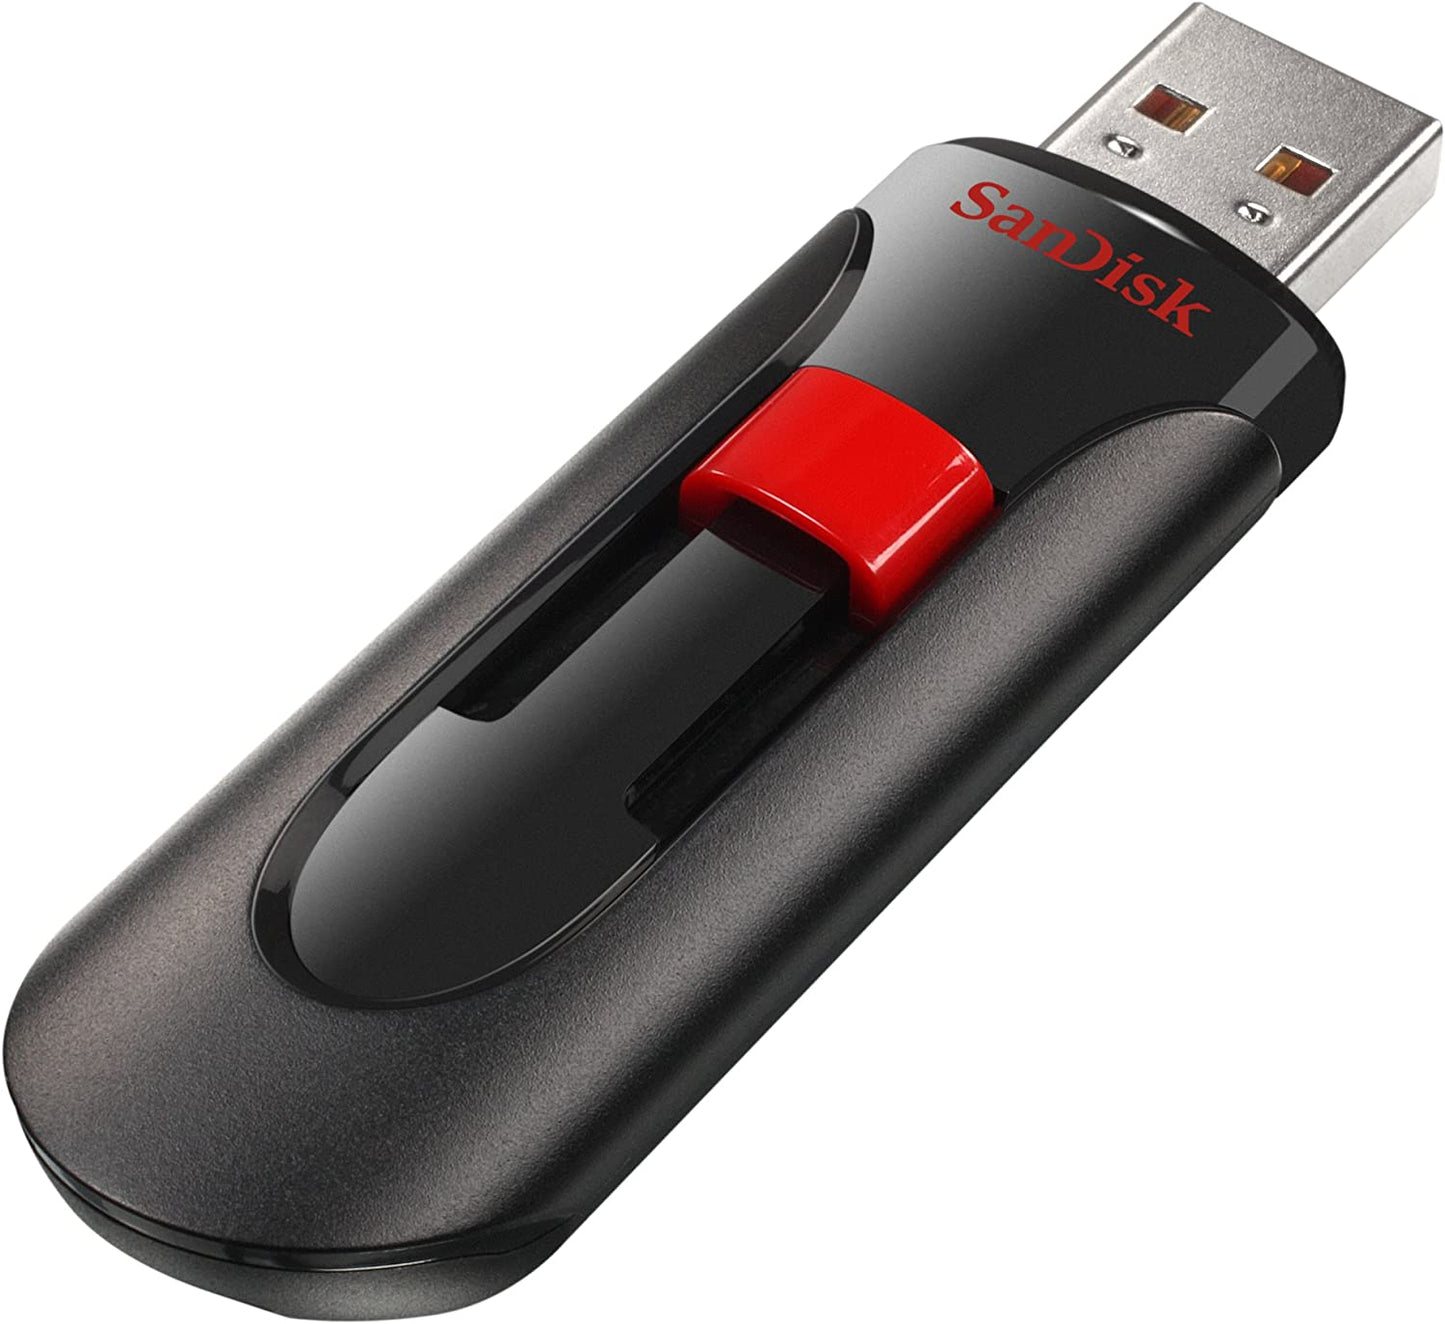 64GB Cruzer Glide USB 2.0 Flash Drive - SDCZ60-064G-B35, Black